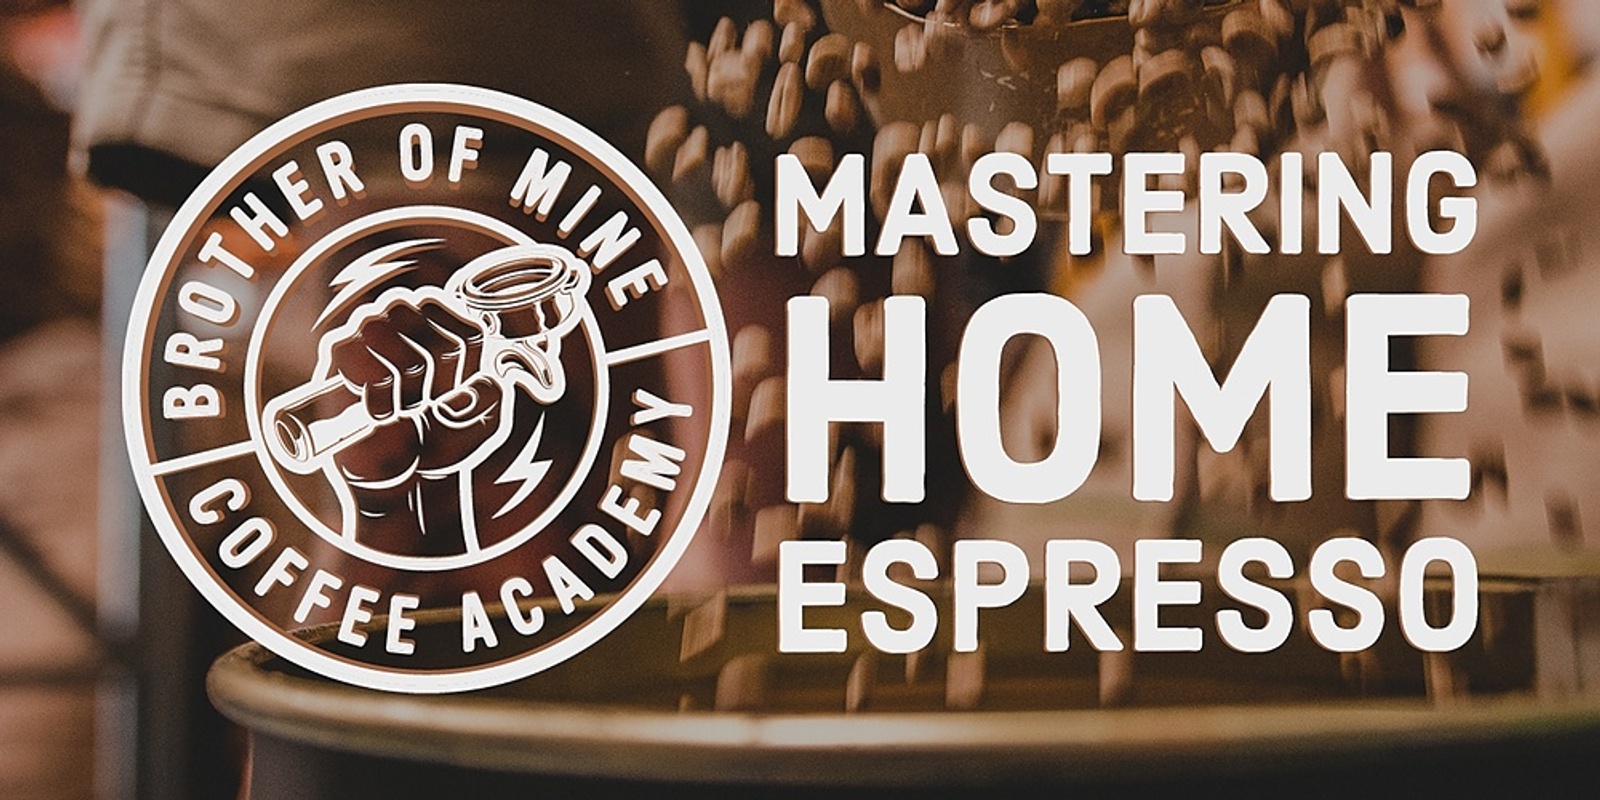 Banner image for Mastering Home Espresso